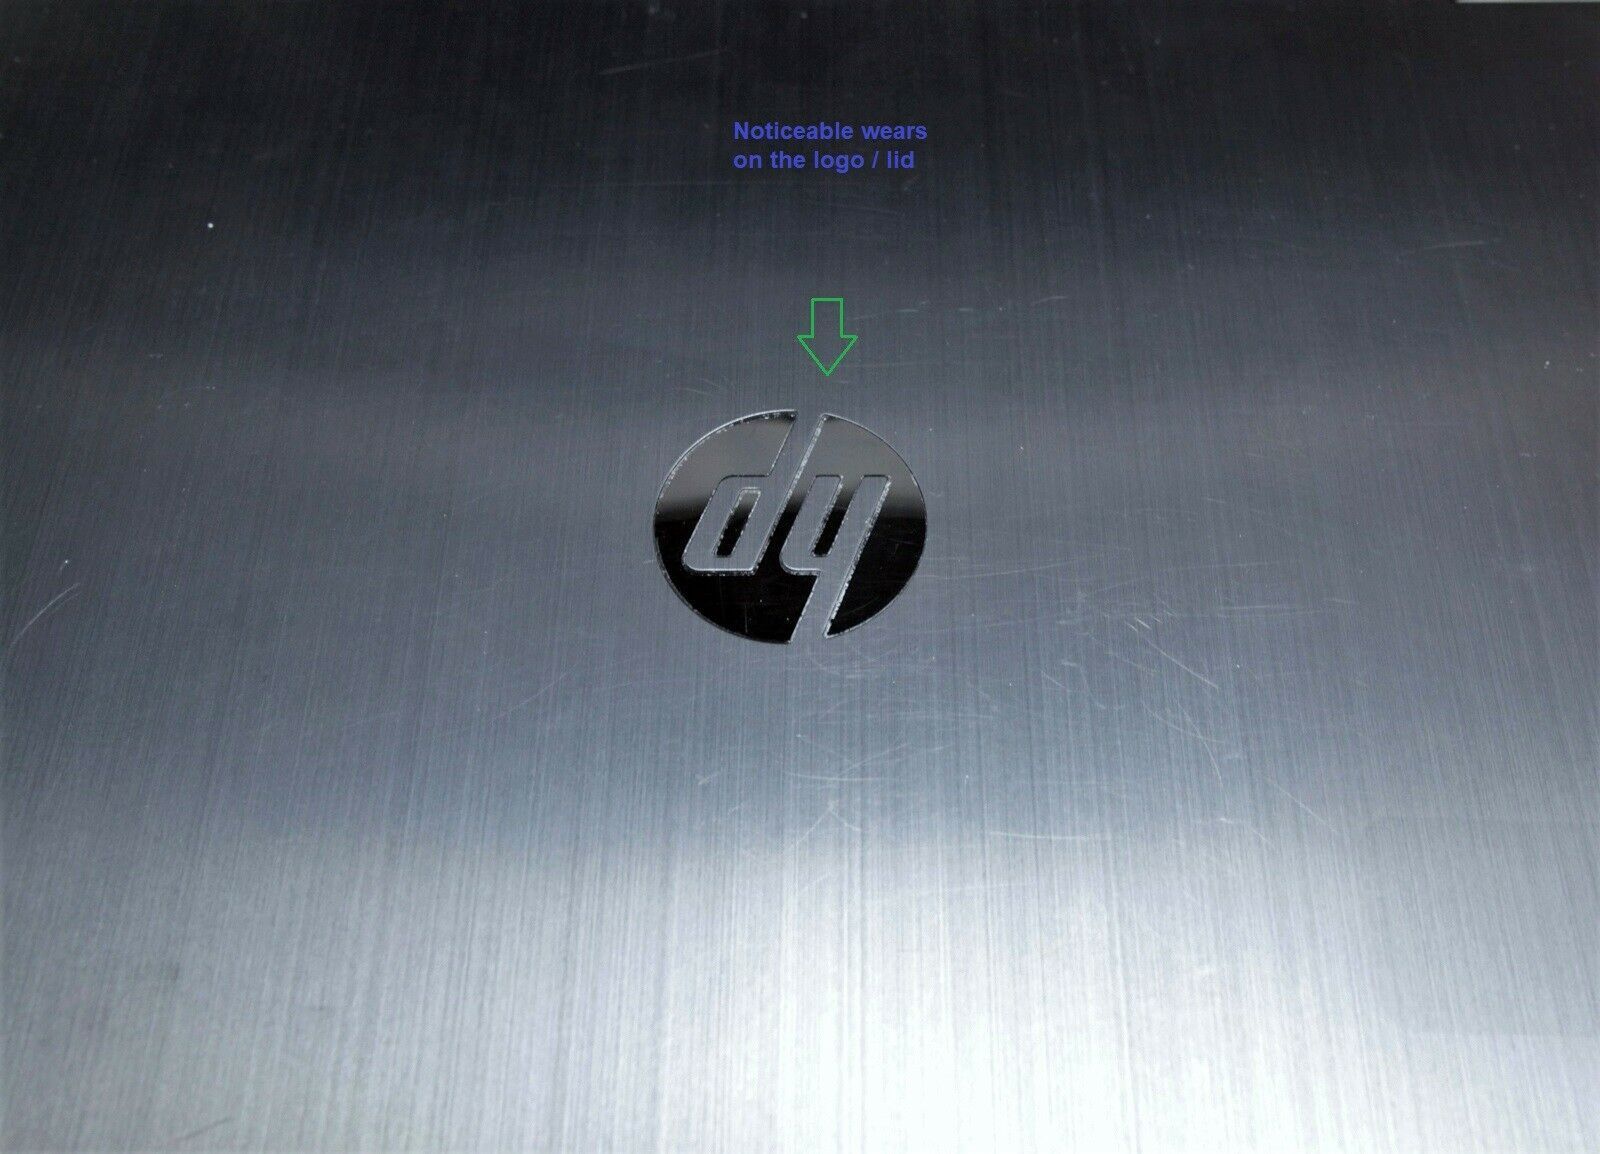 HP ZBook 15 G2 CAD Laptop: 32GB RAM, Core i7, 480GB SSD, Warranty, VAT - CruiseTech